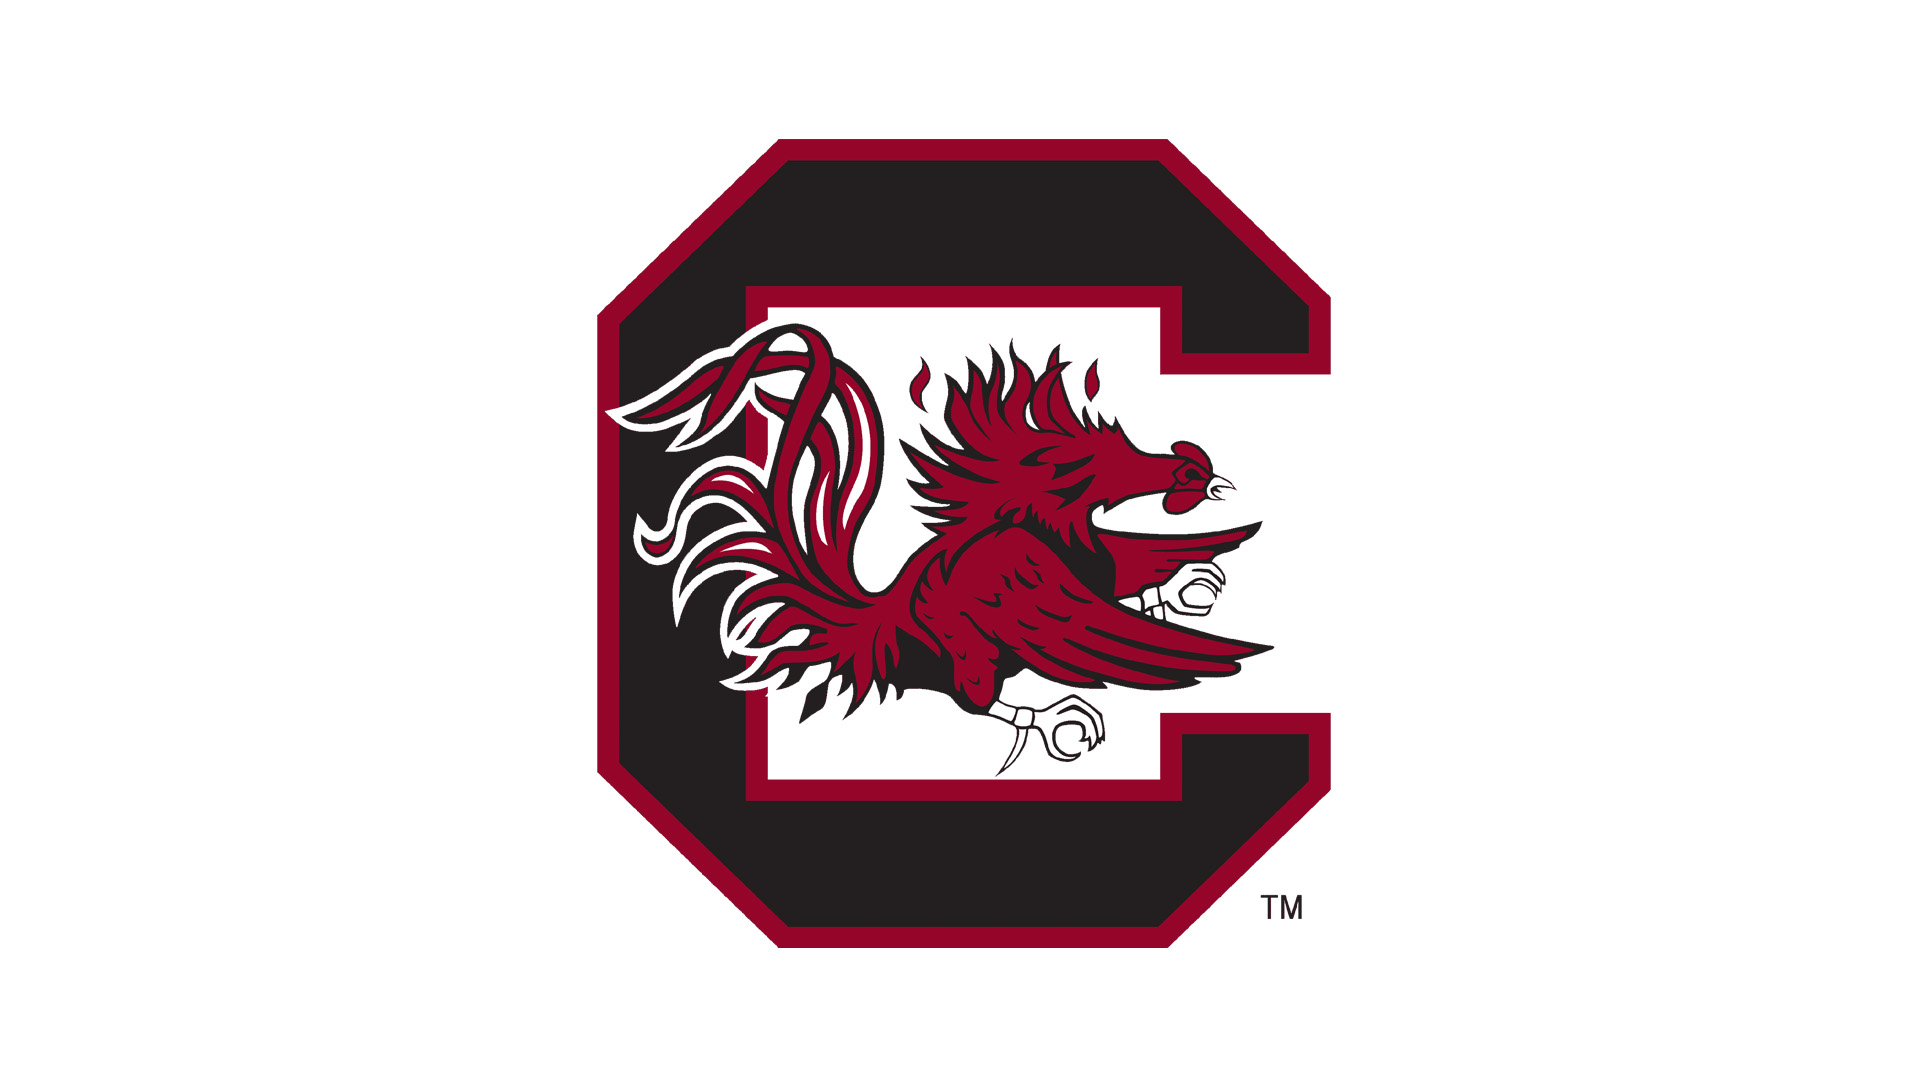 SEC Cross Country Championship Central University of South Carolina